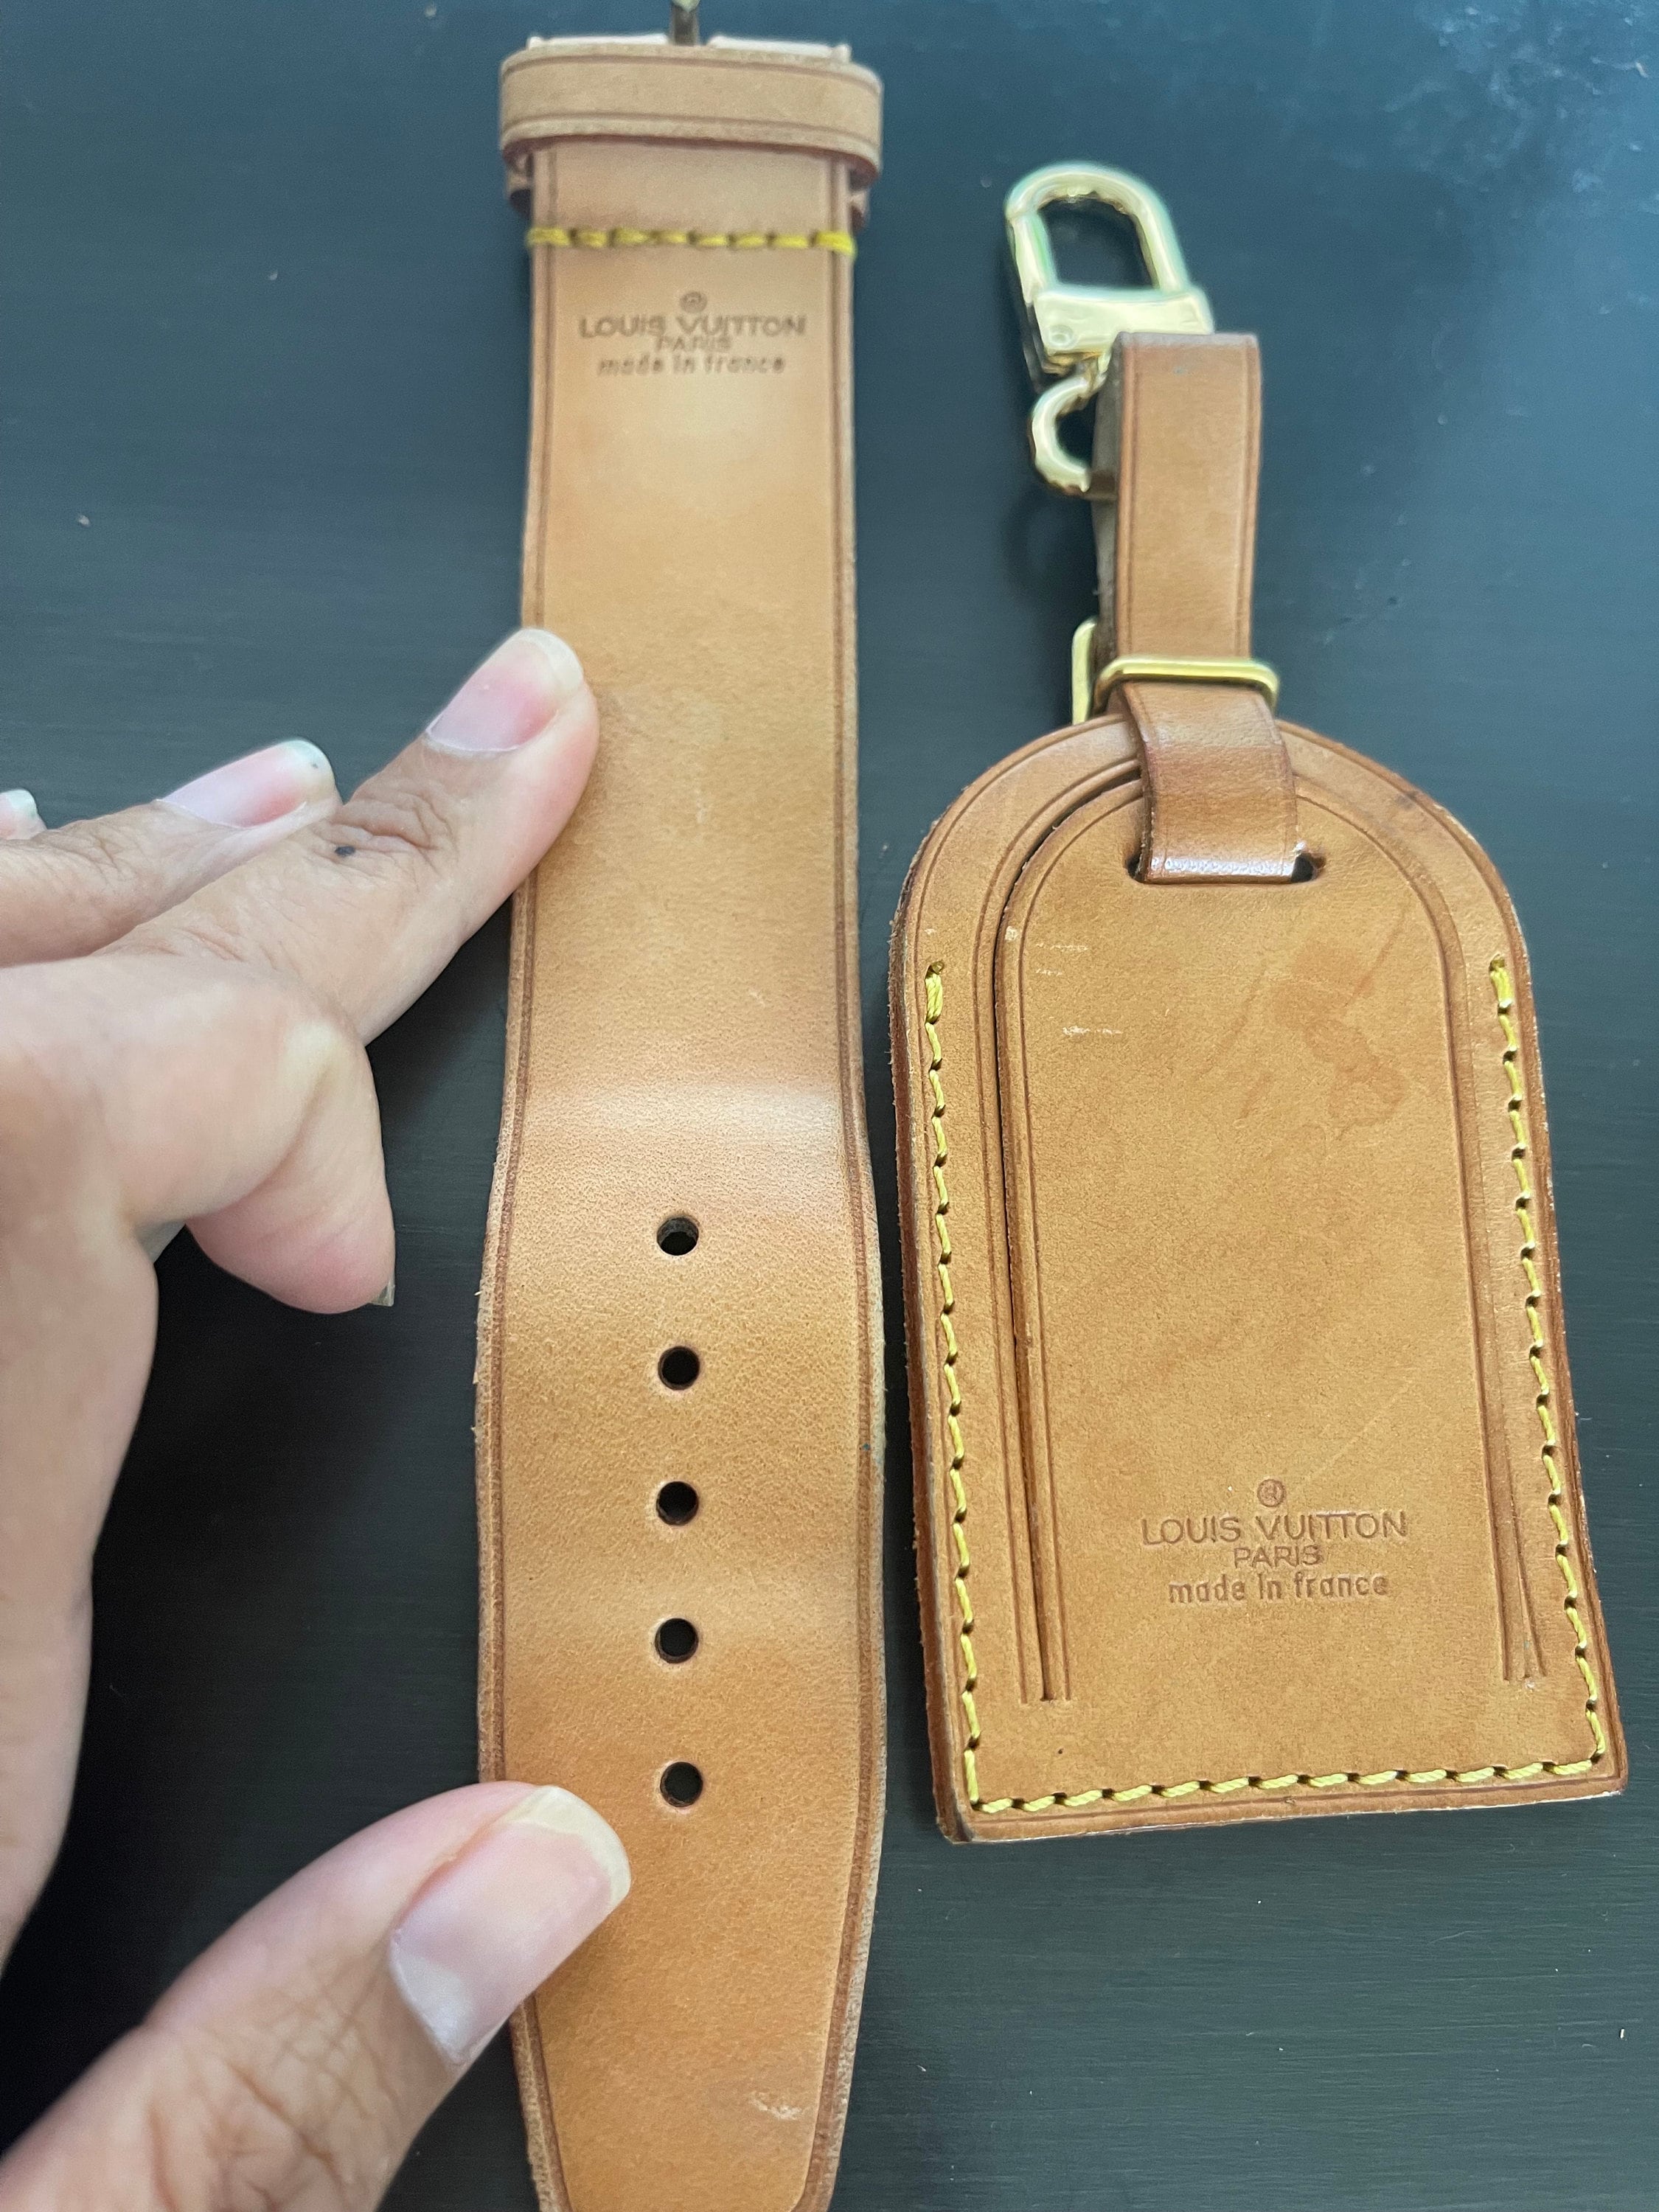 Louis Vuitton, Bags, Louis Vuitton Set Of 3 Customized Paris Luggage Tags  And Piognet